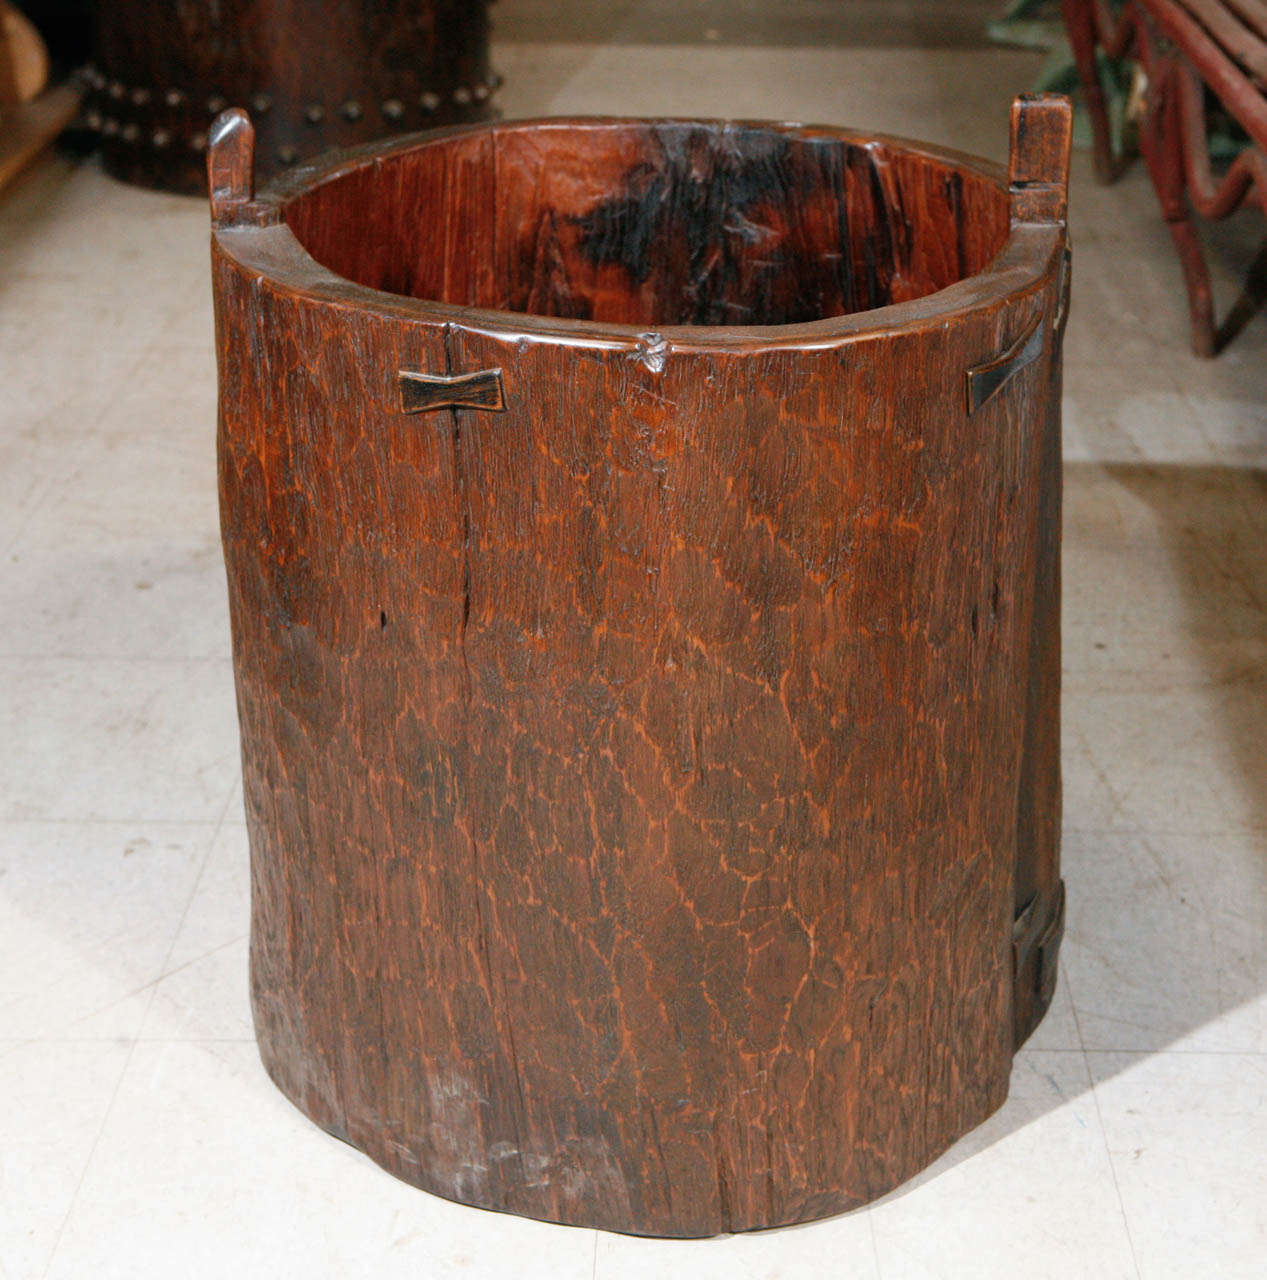 Antique Granary Vessel of Thick Hardwood 1